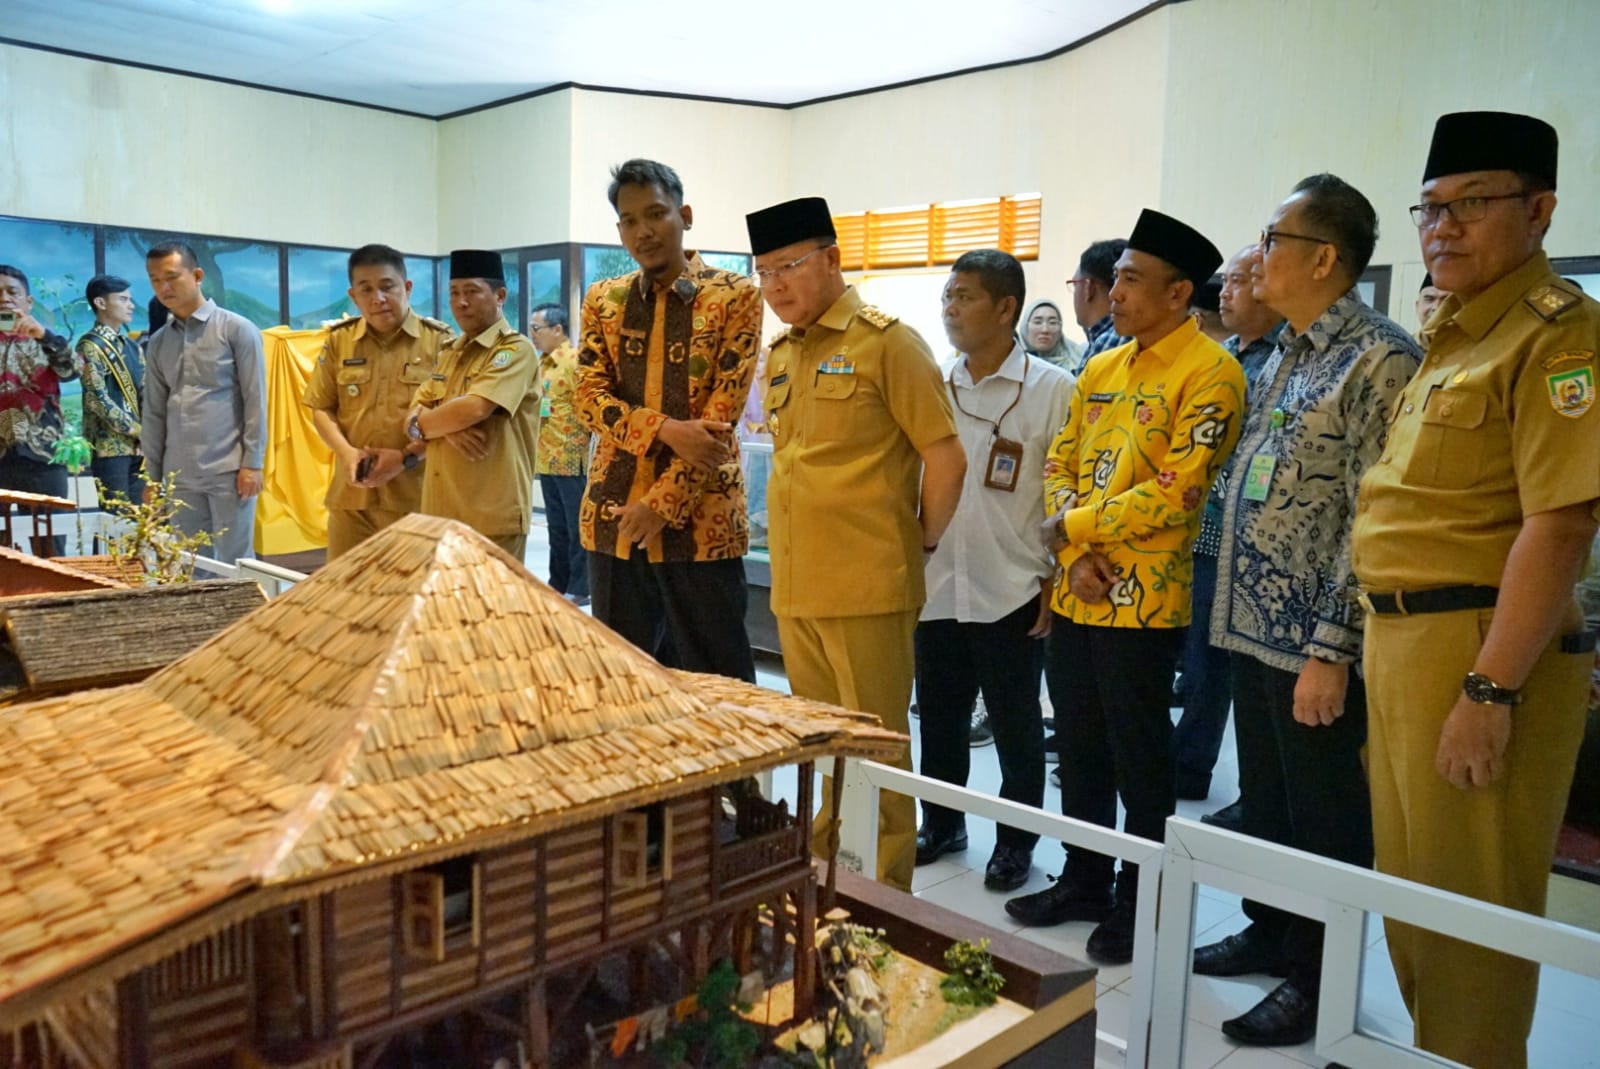 Kenalkan Sejarah dan Budaya: Museum Negeri Bengkulu Gelar Pameran Senjata Tradisional